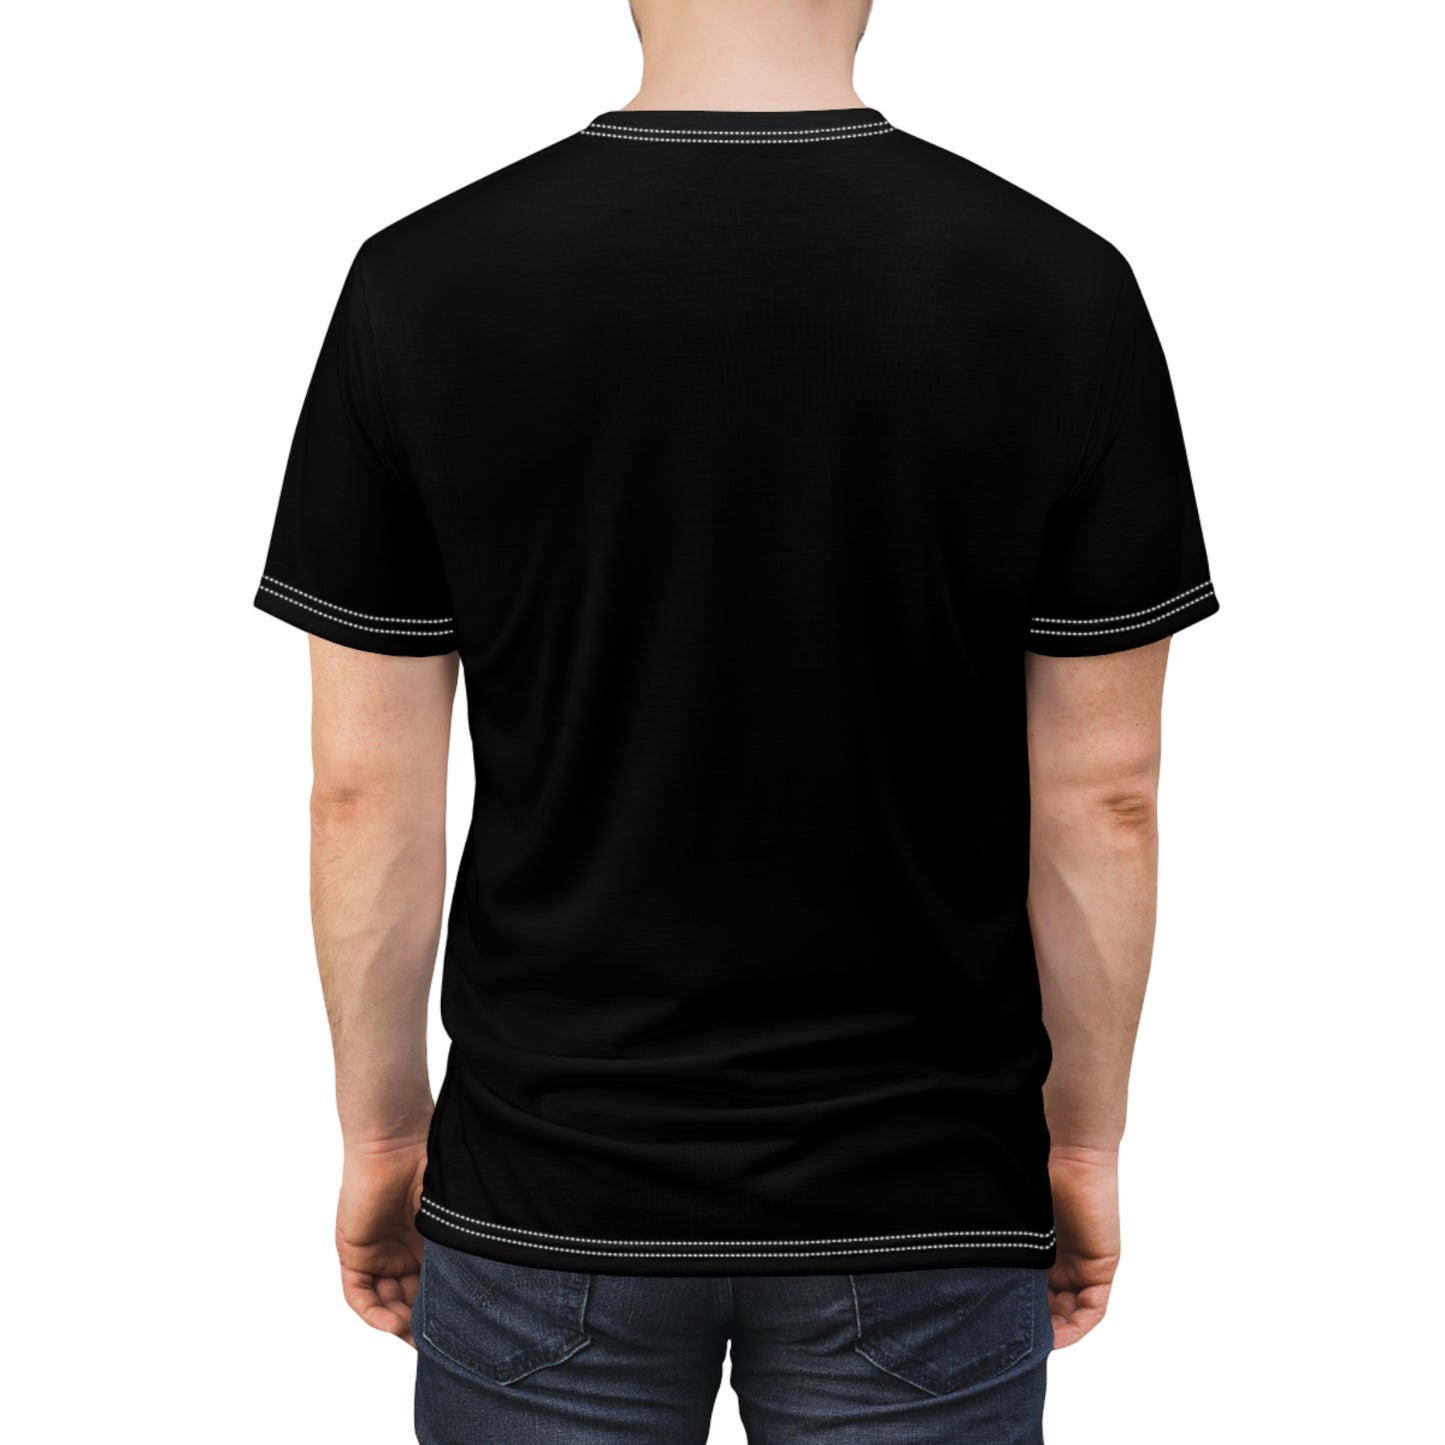 Secret Of The Big Easy - Unisex All-Over Print Cut & Sew T-Shirt